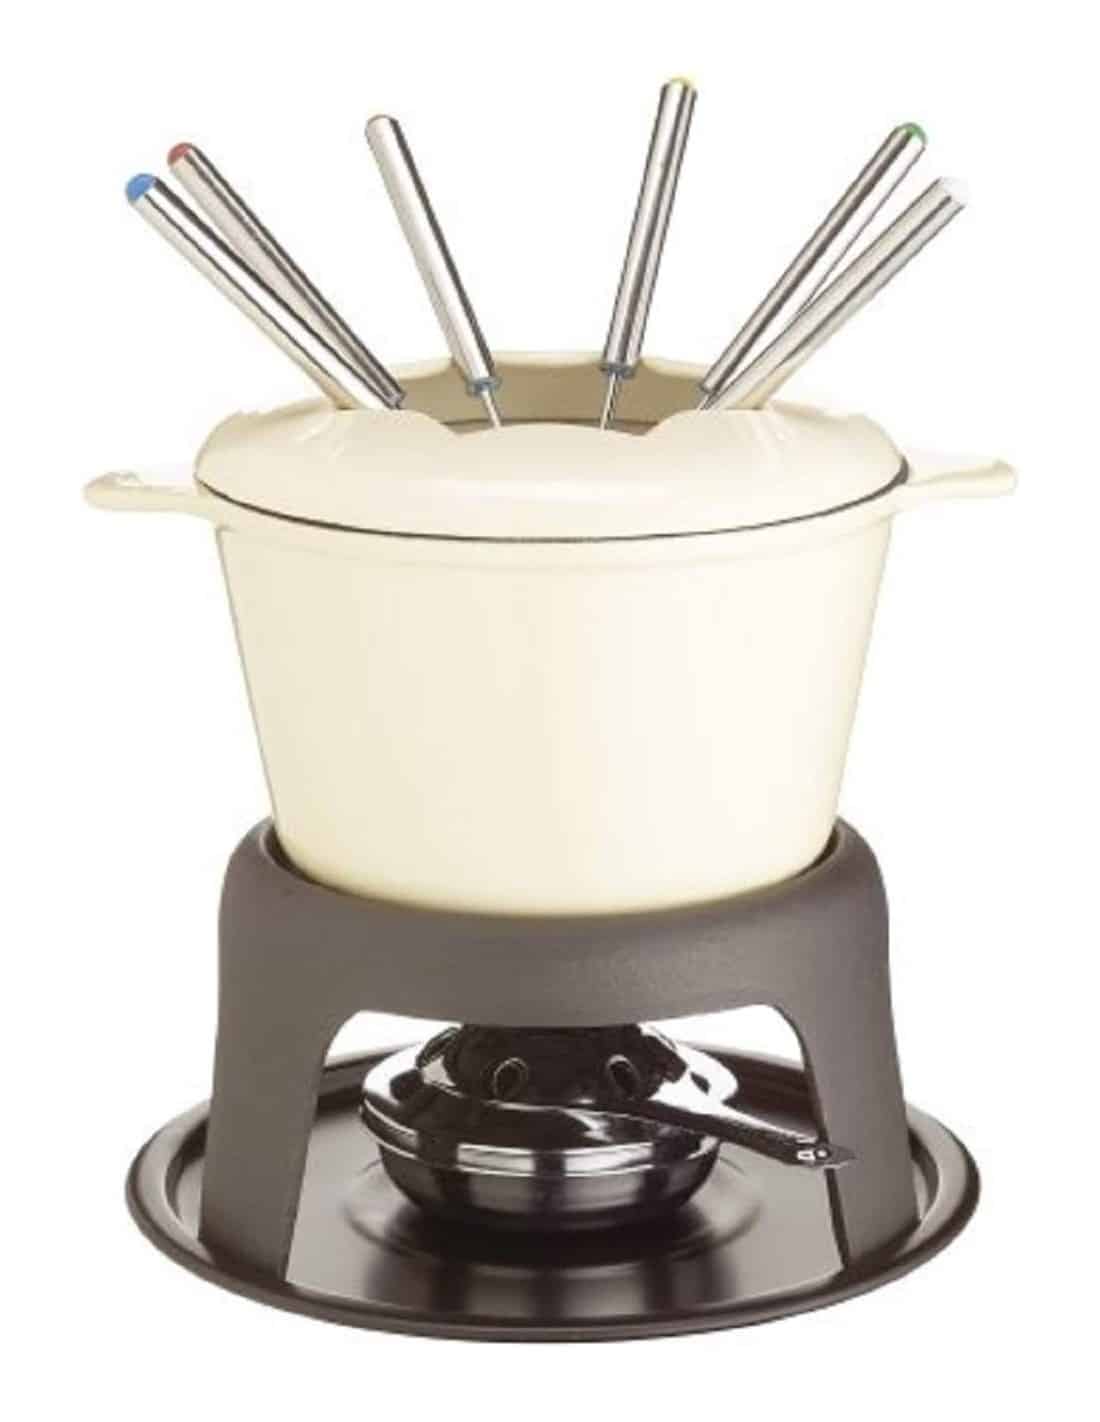 https://www.mimocook.com/31791-thickbox_default/kitchen-craft-magistral-de-crema-fondue-de-hierro-fundido.jpg